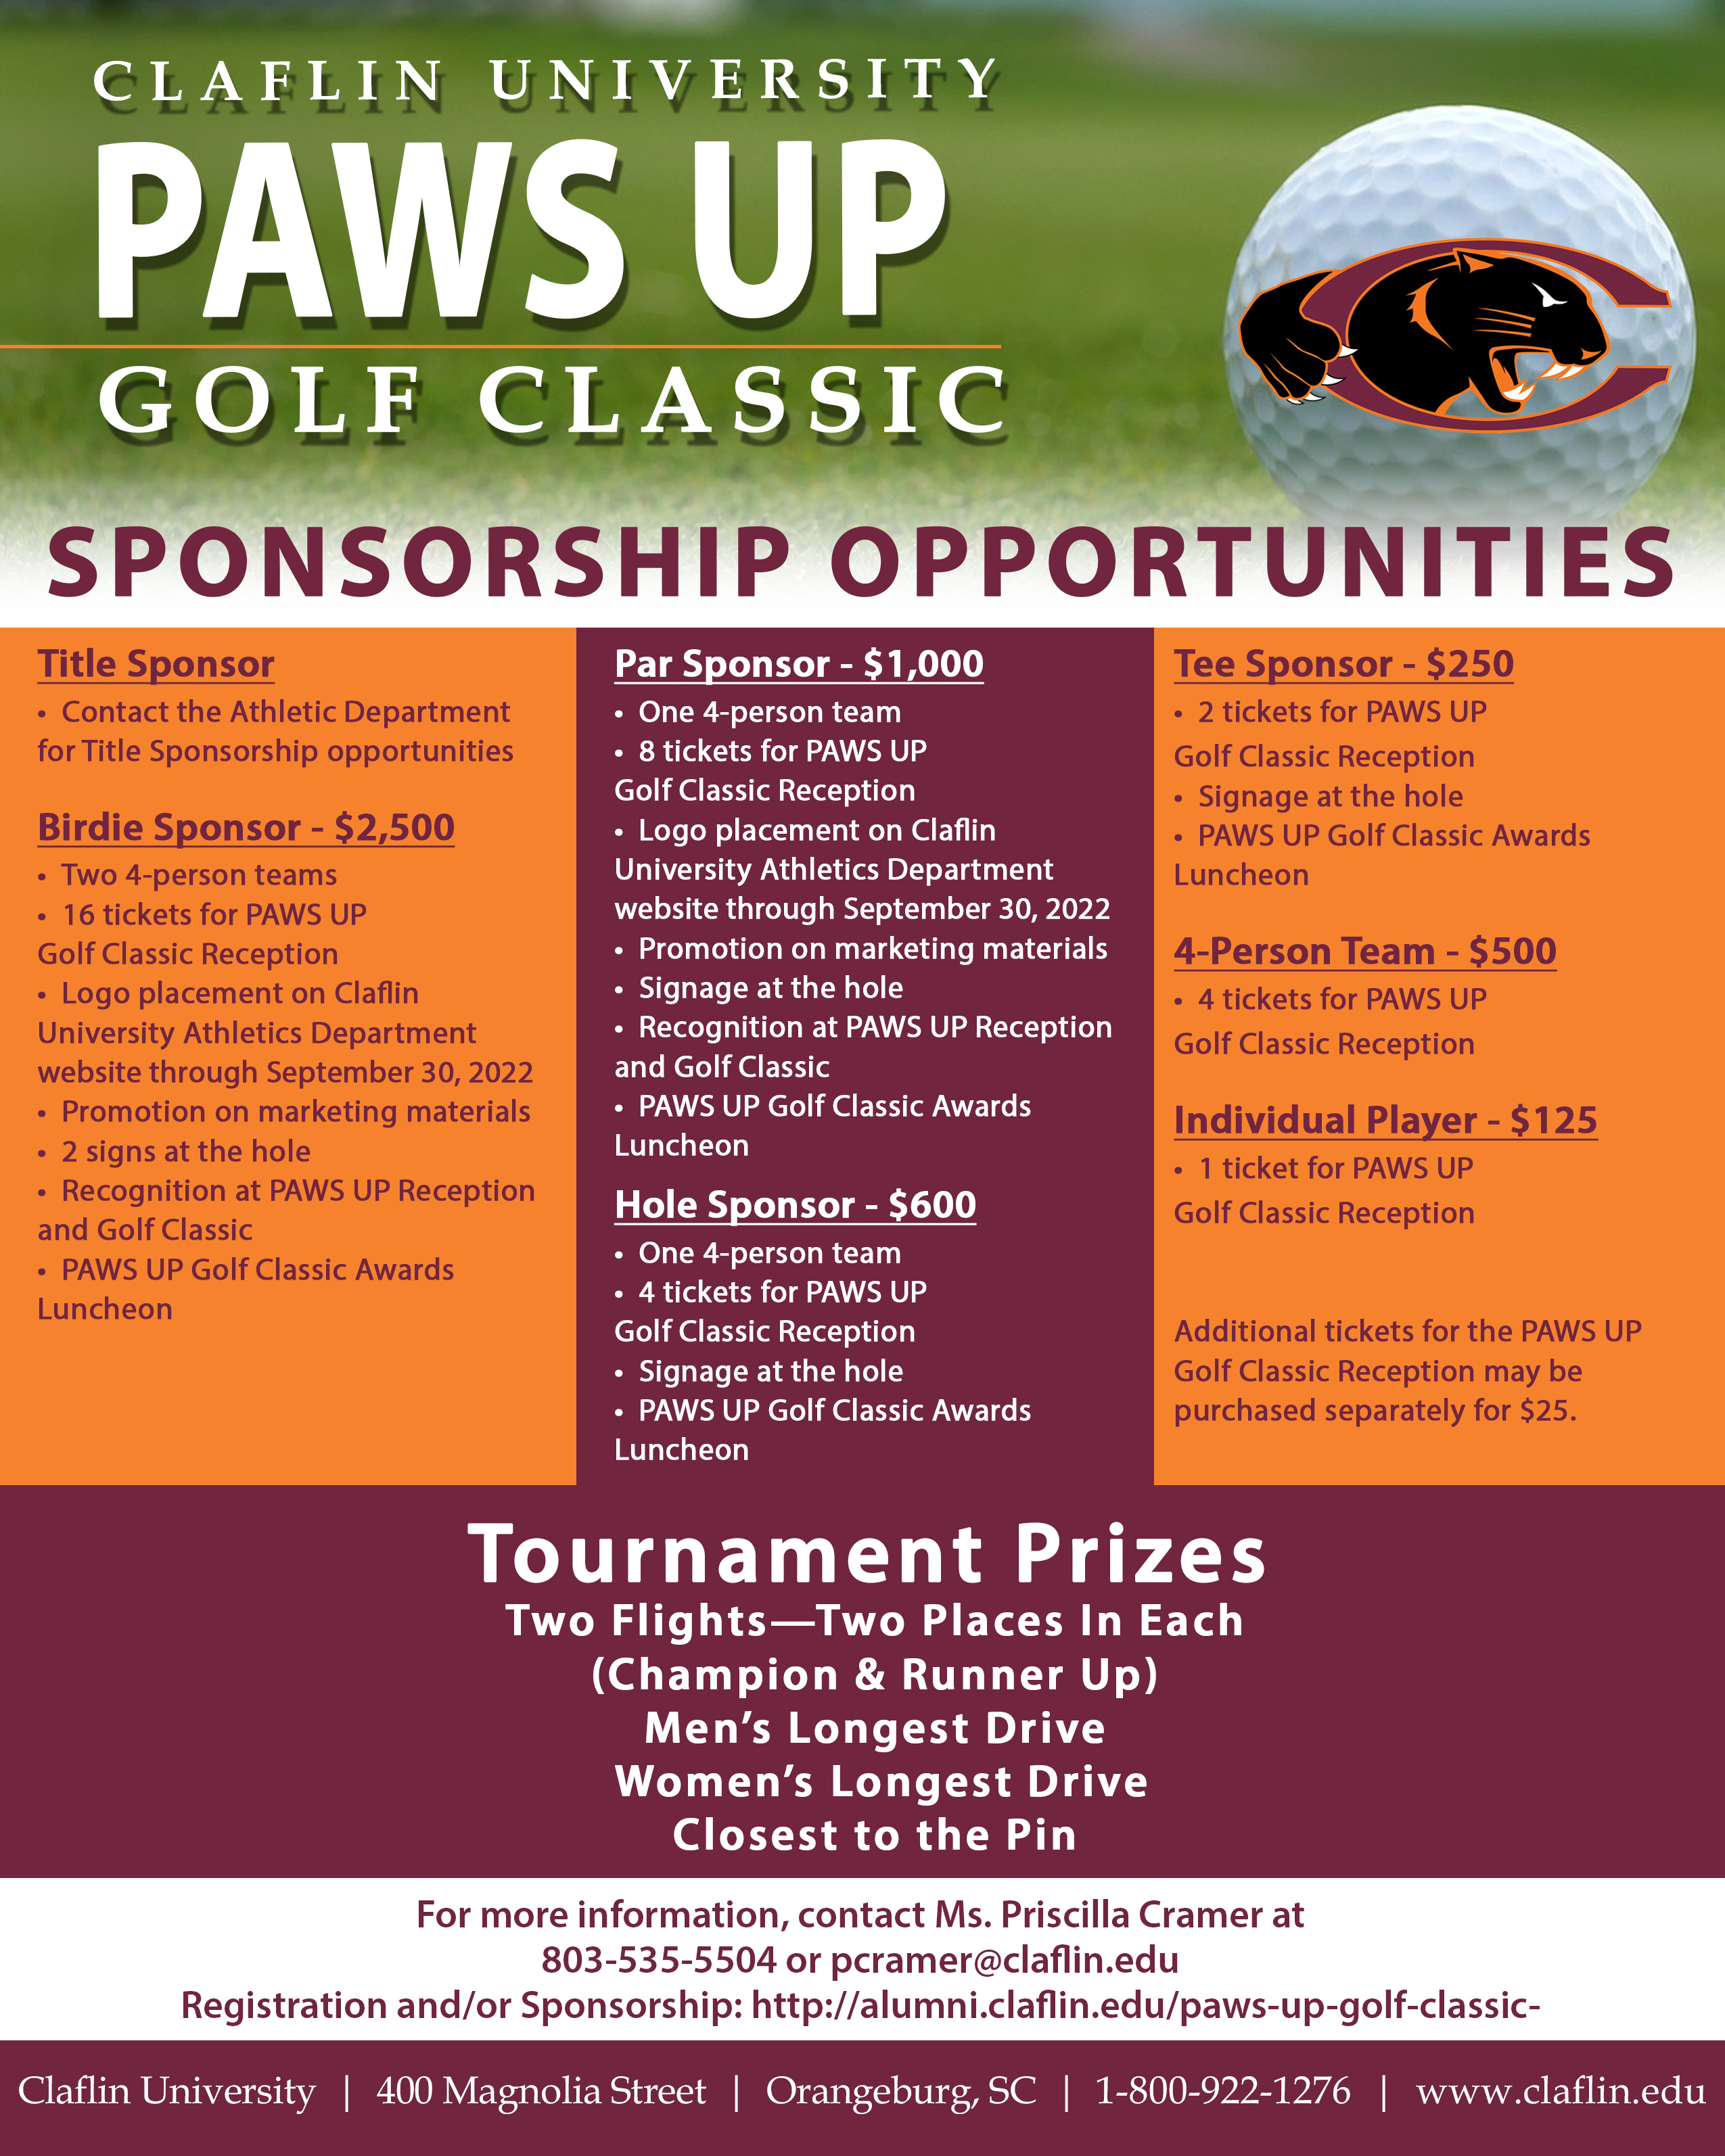 PAWS UP Golf Classic 2022 sponsorship